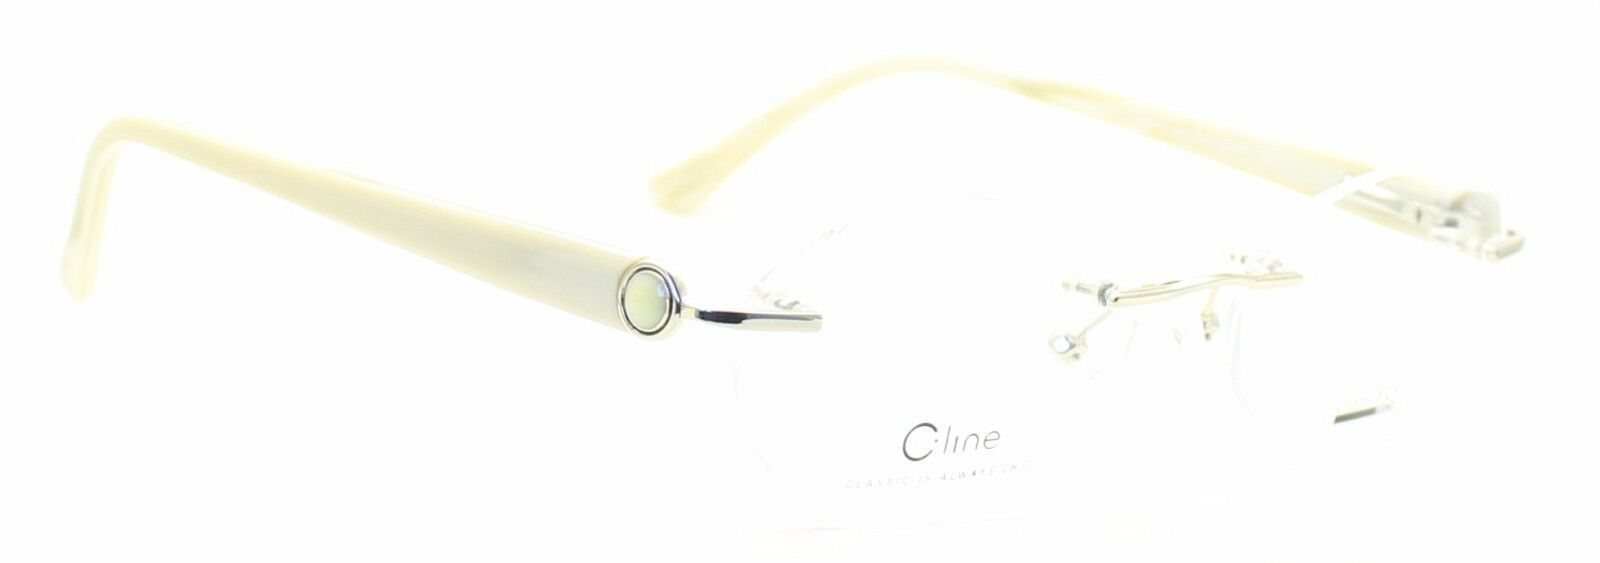 LIGHTFLY For C Line LFBF41 Eyewear FRAMES RX Eyeglasses Optical Glasses TRUSTED